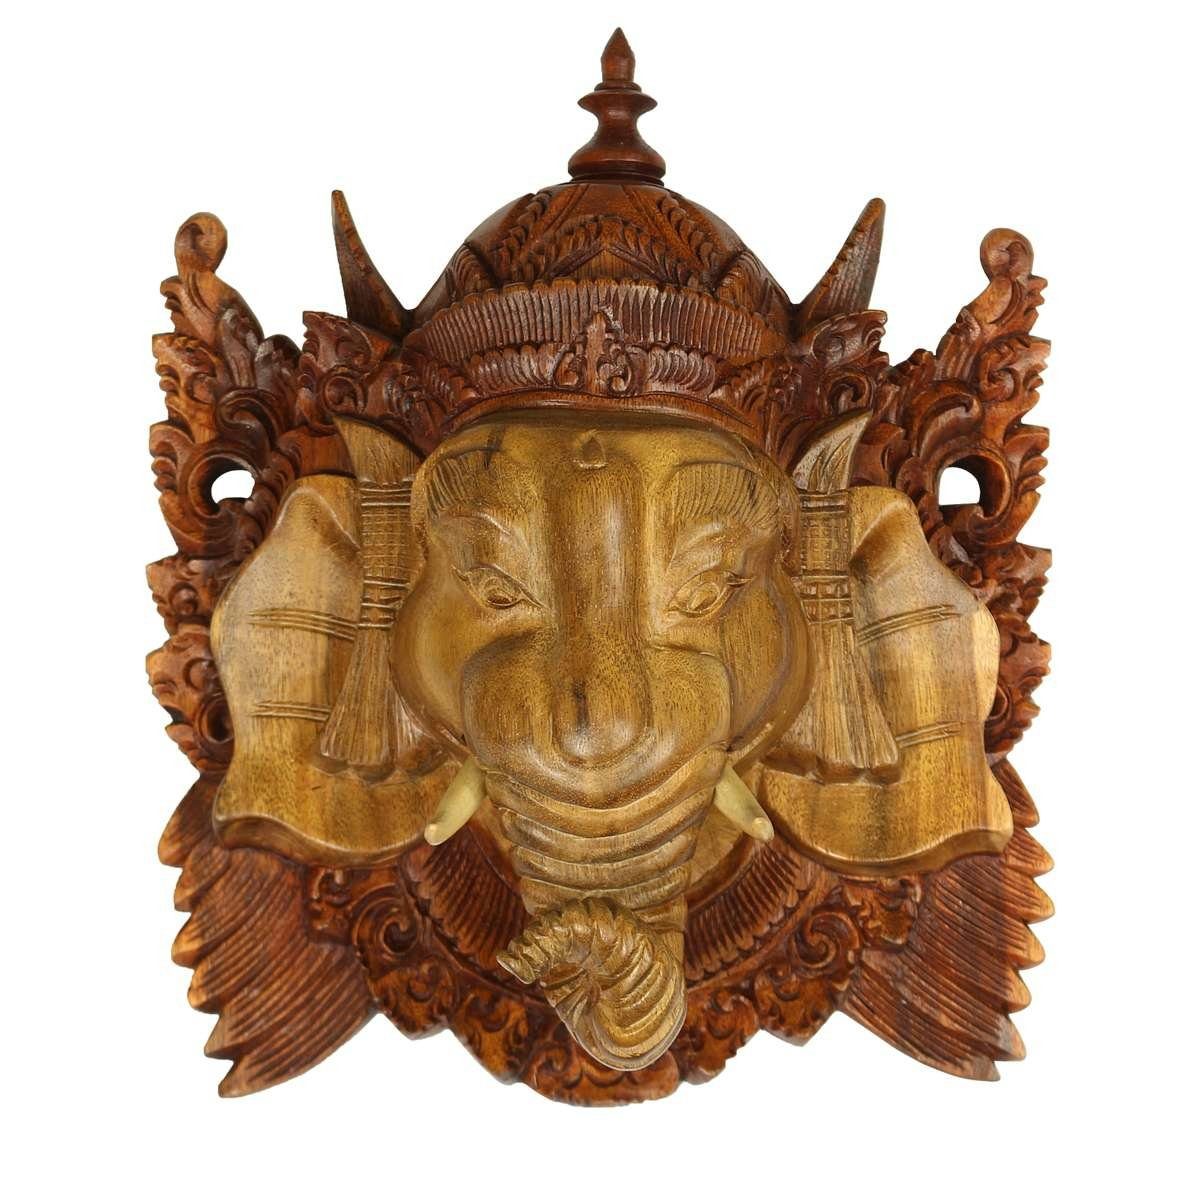 Handarbeit Holzbild Soar Holz (1 aus 2 Ganesha farbig Oriental St), Galerie 16 cm, Ganesha